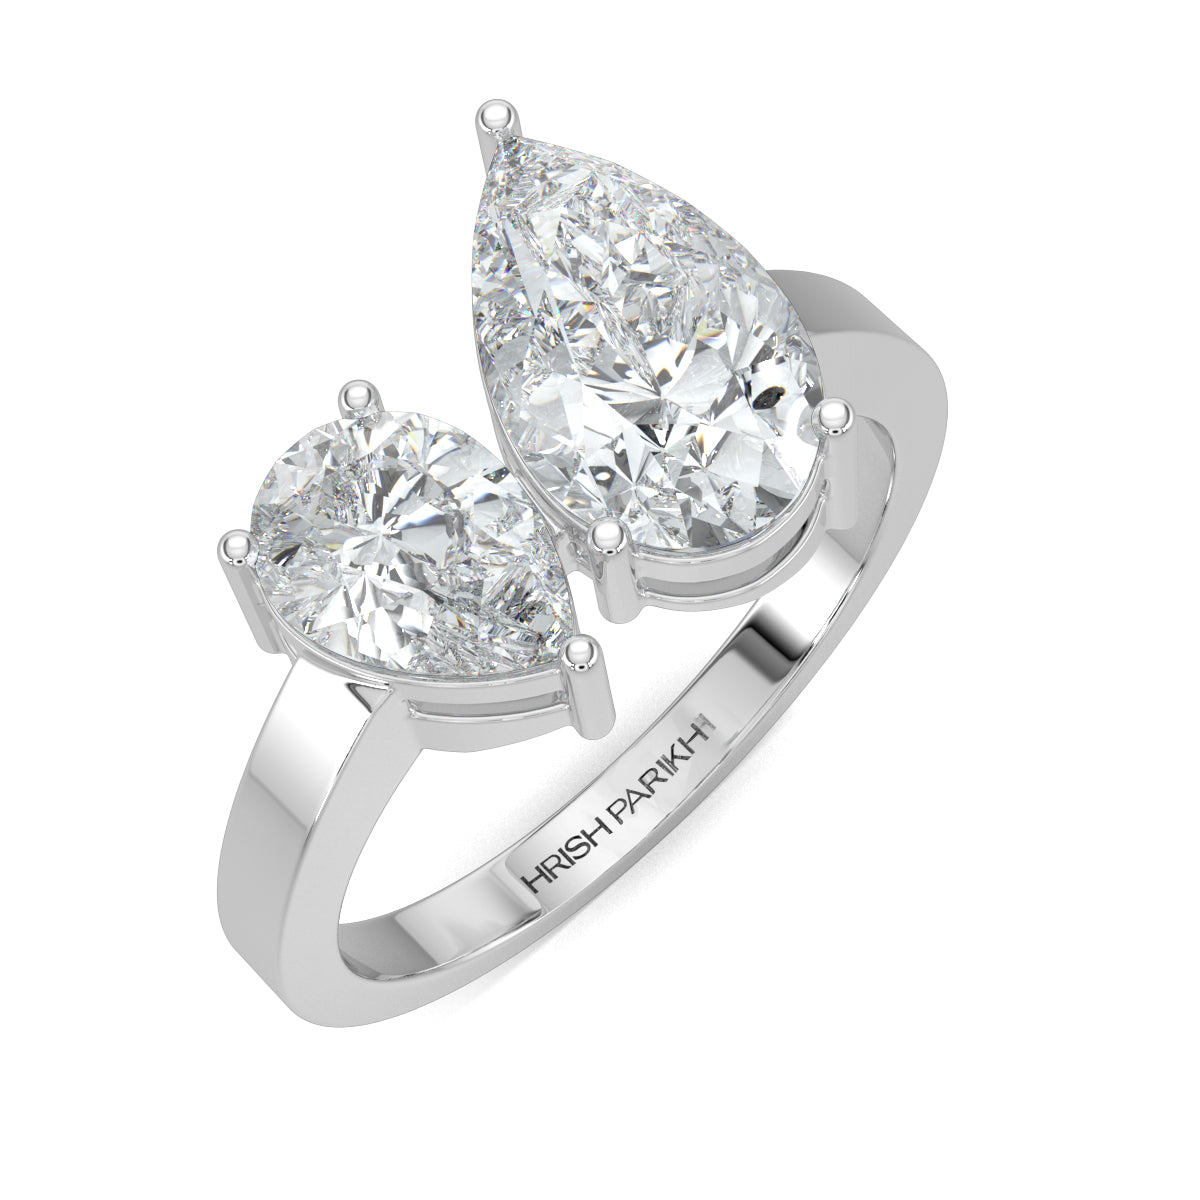 White Gold, Diamond Ring, natural diamond rings, lab-grown diamond rings, pear diamond rings, everyday rings, sustainable diamond jewelry, classic diamond bands